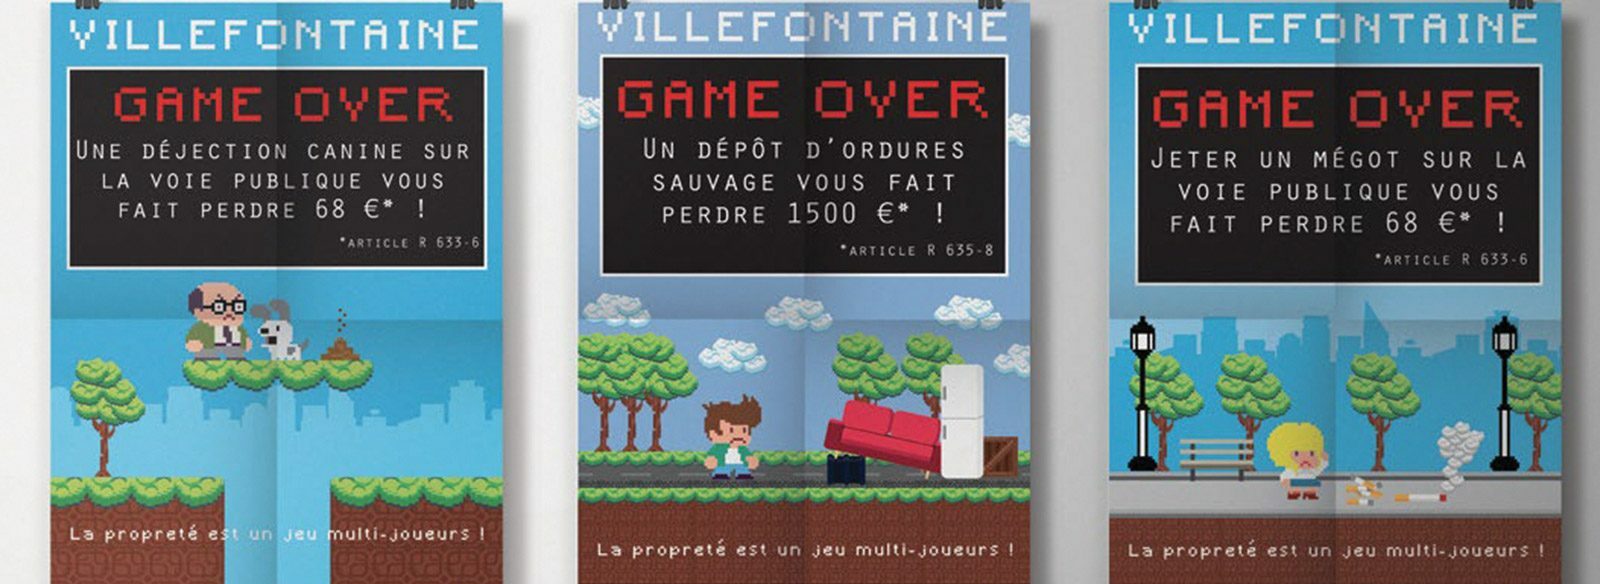 Campagne propreté Villefontaine